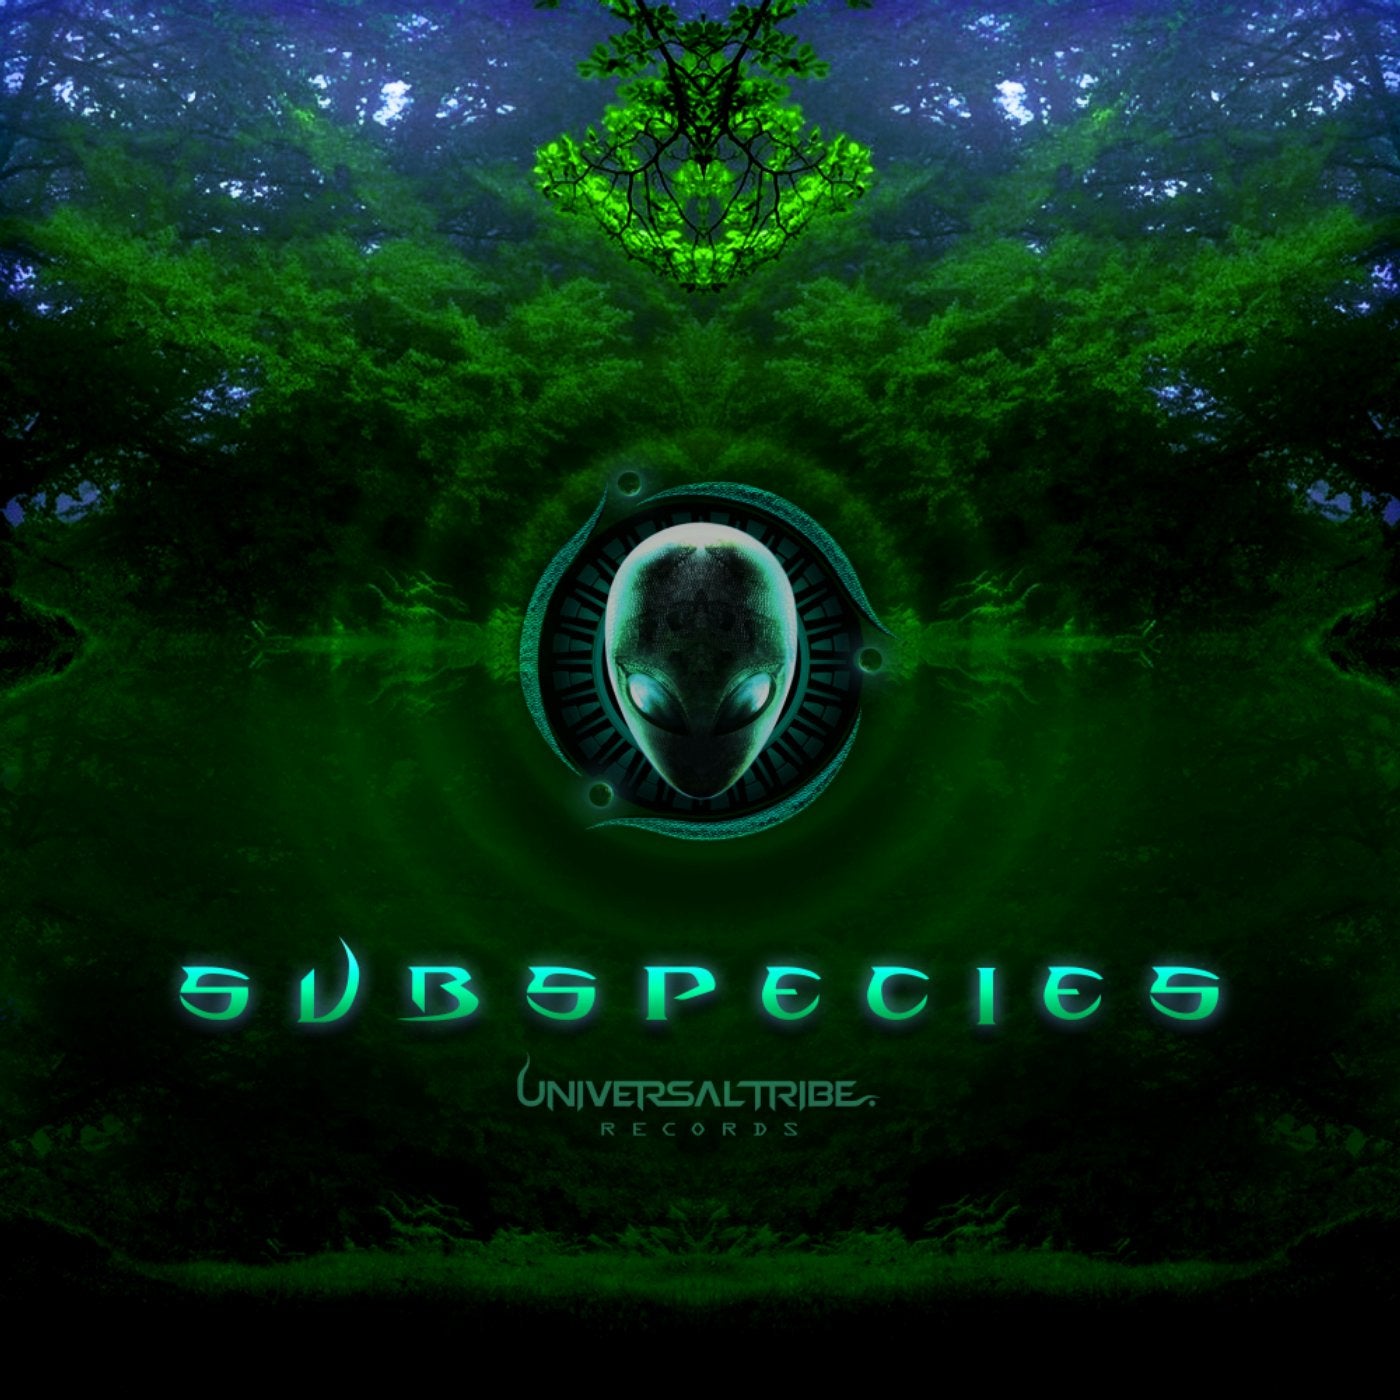 Subspecies